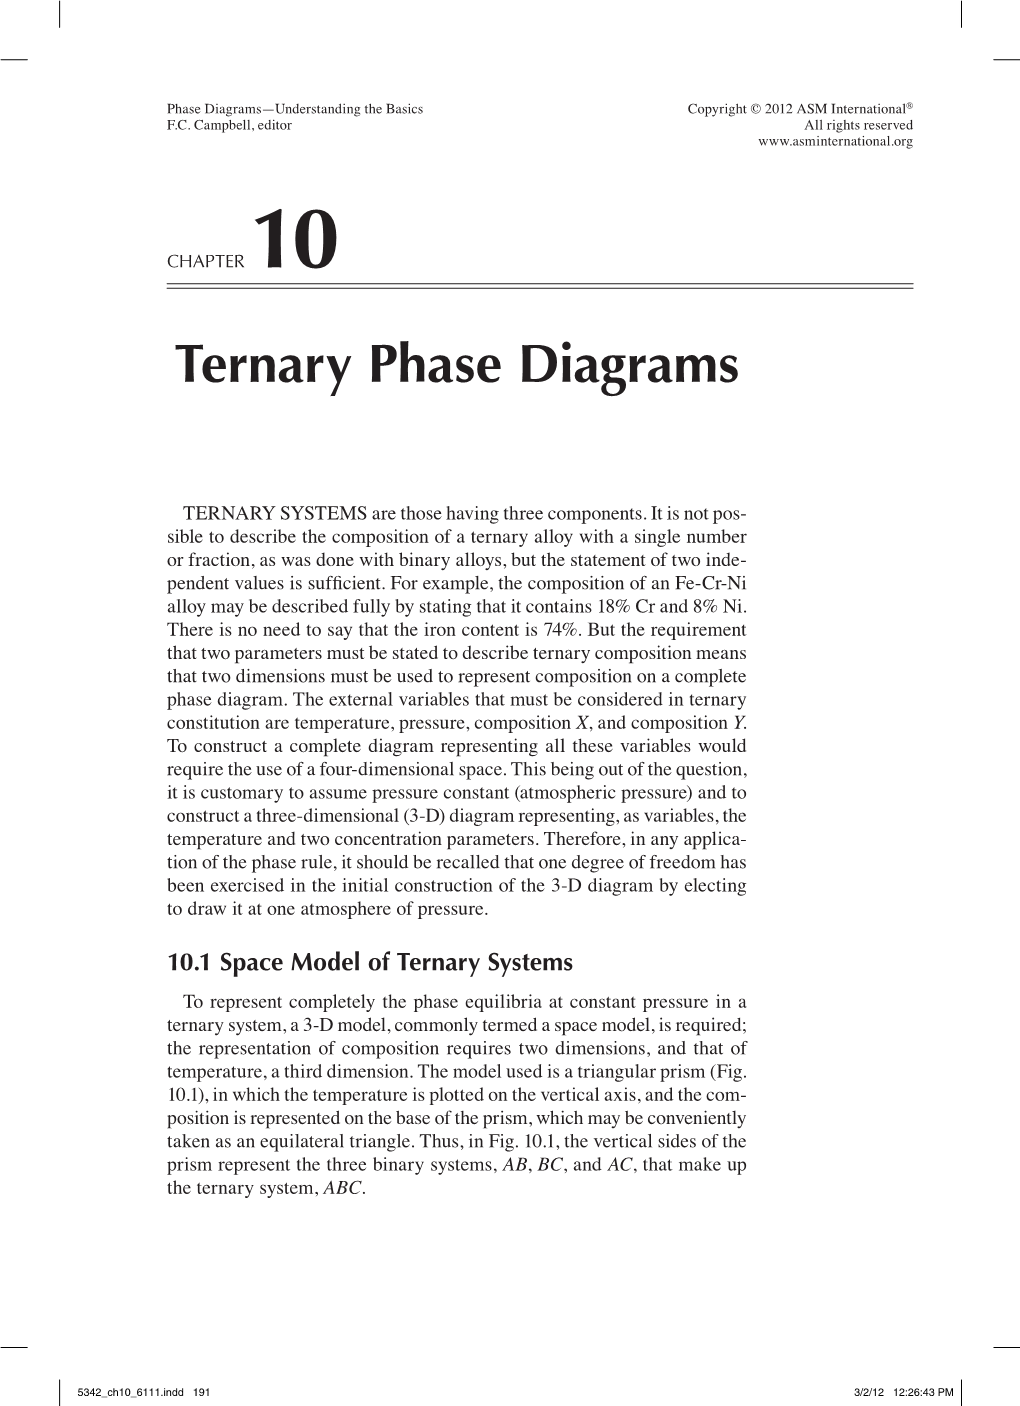 Ternary Phase Diagrams